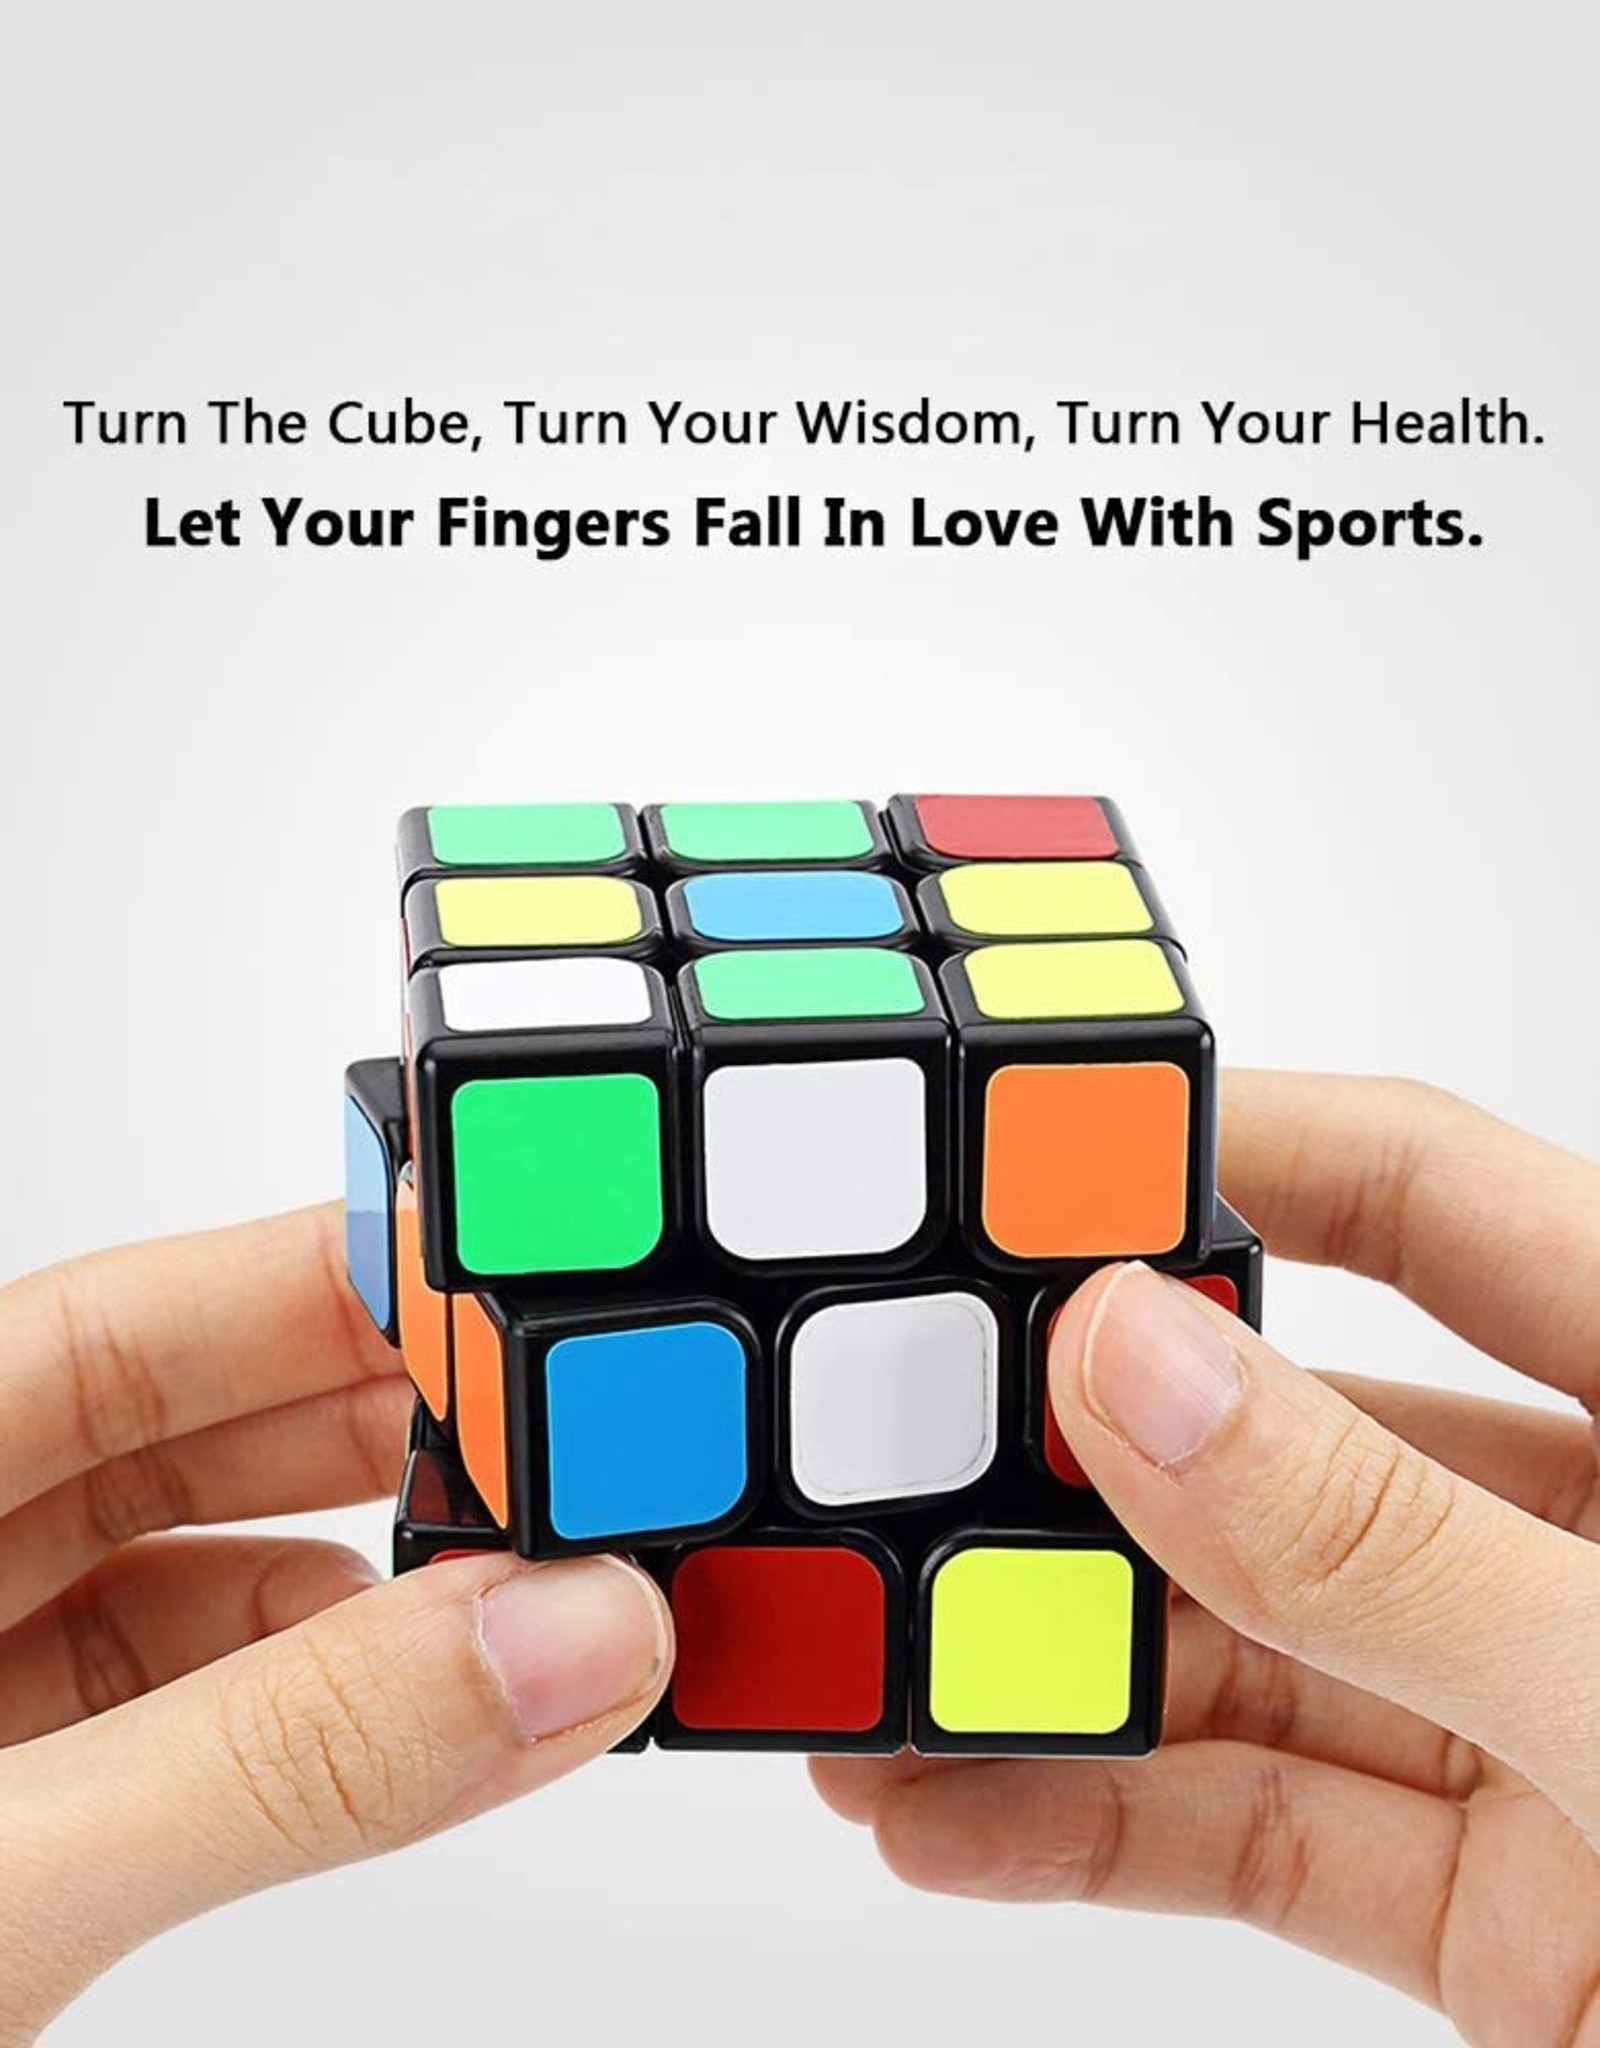 Winning Moves Rubiks Cube 3X3